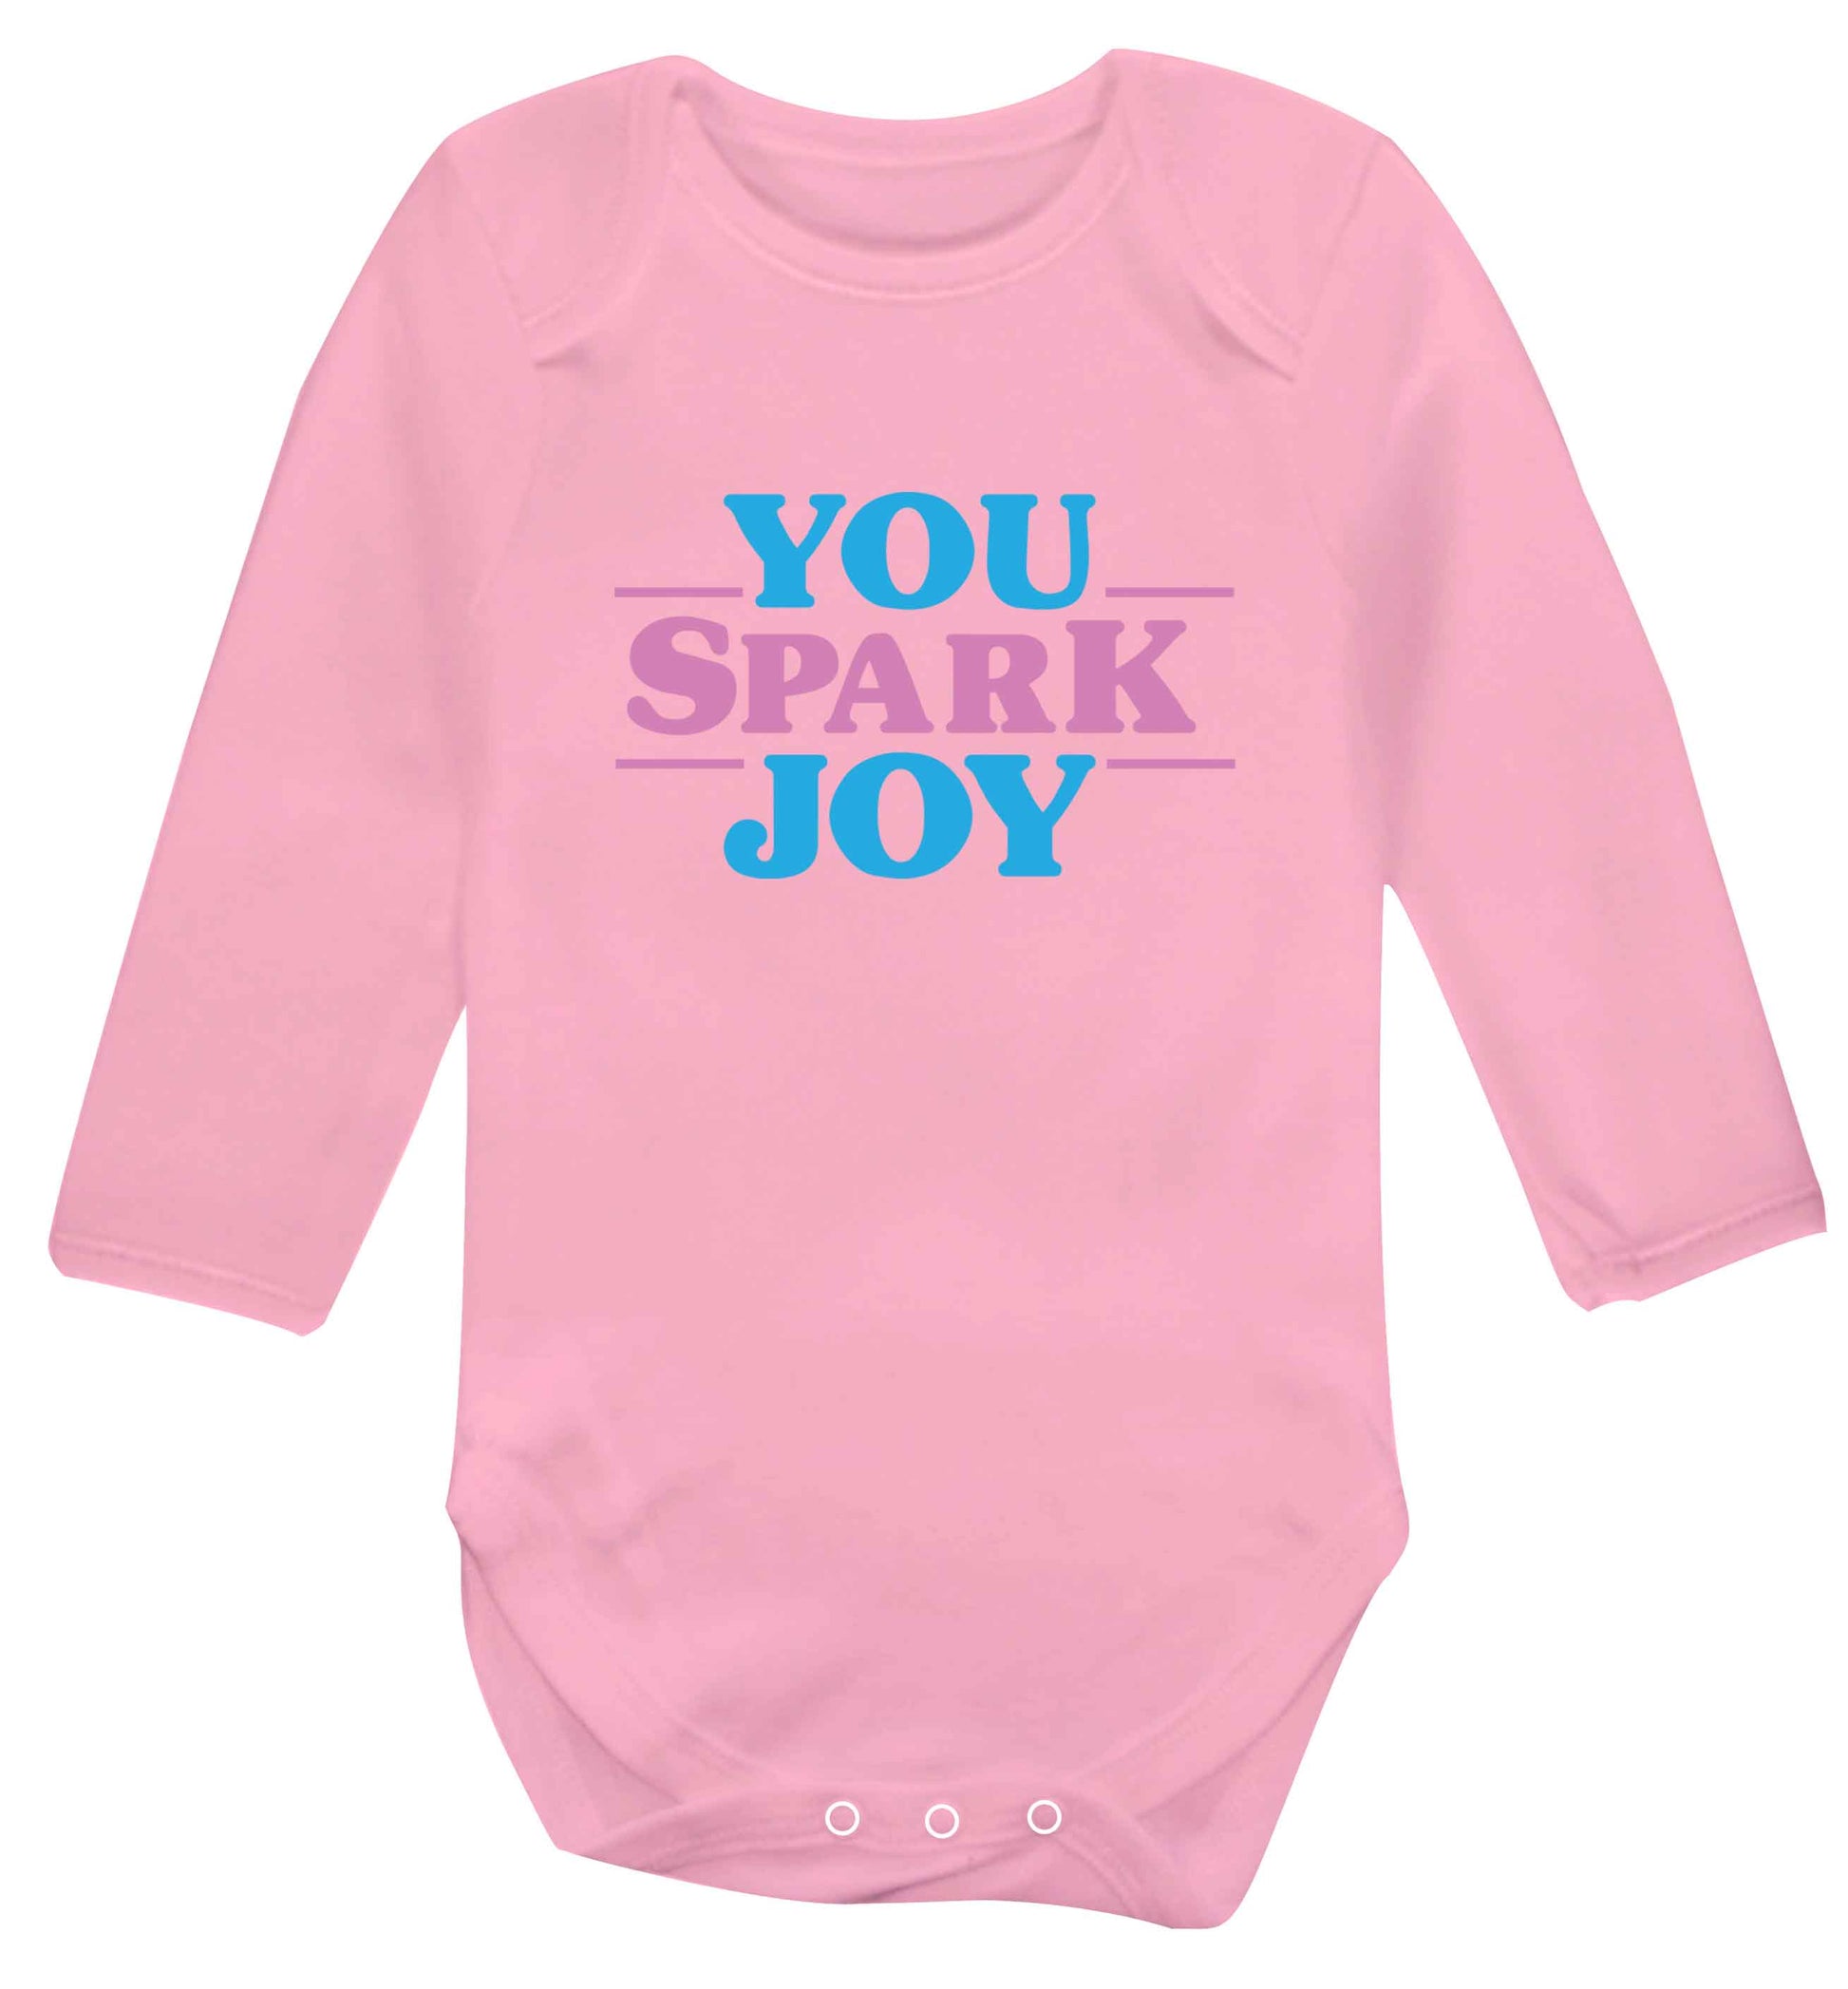 You spark joy baby vest long sleeved pale pink 6-12 months